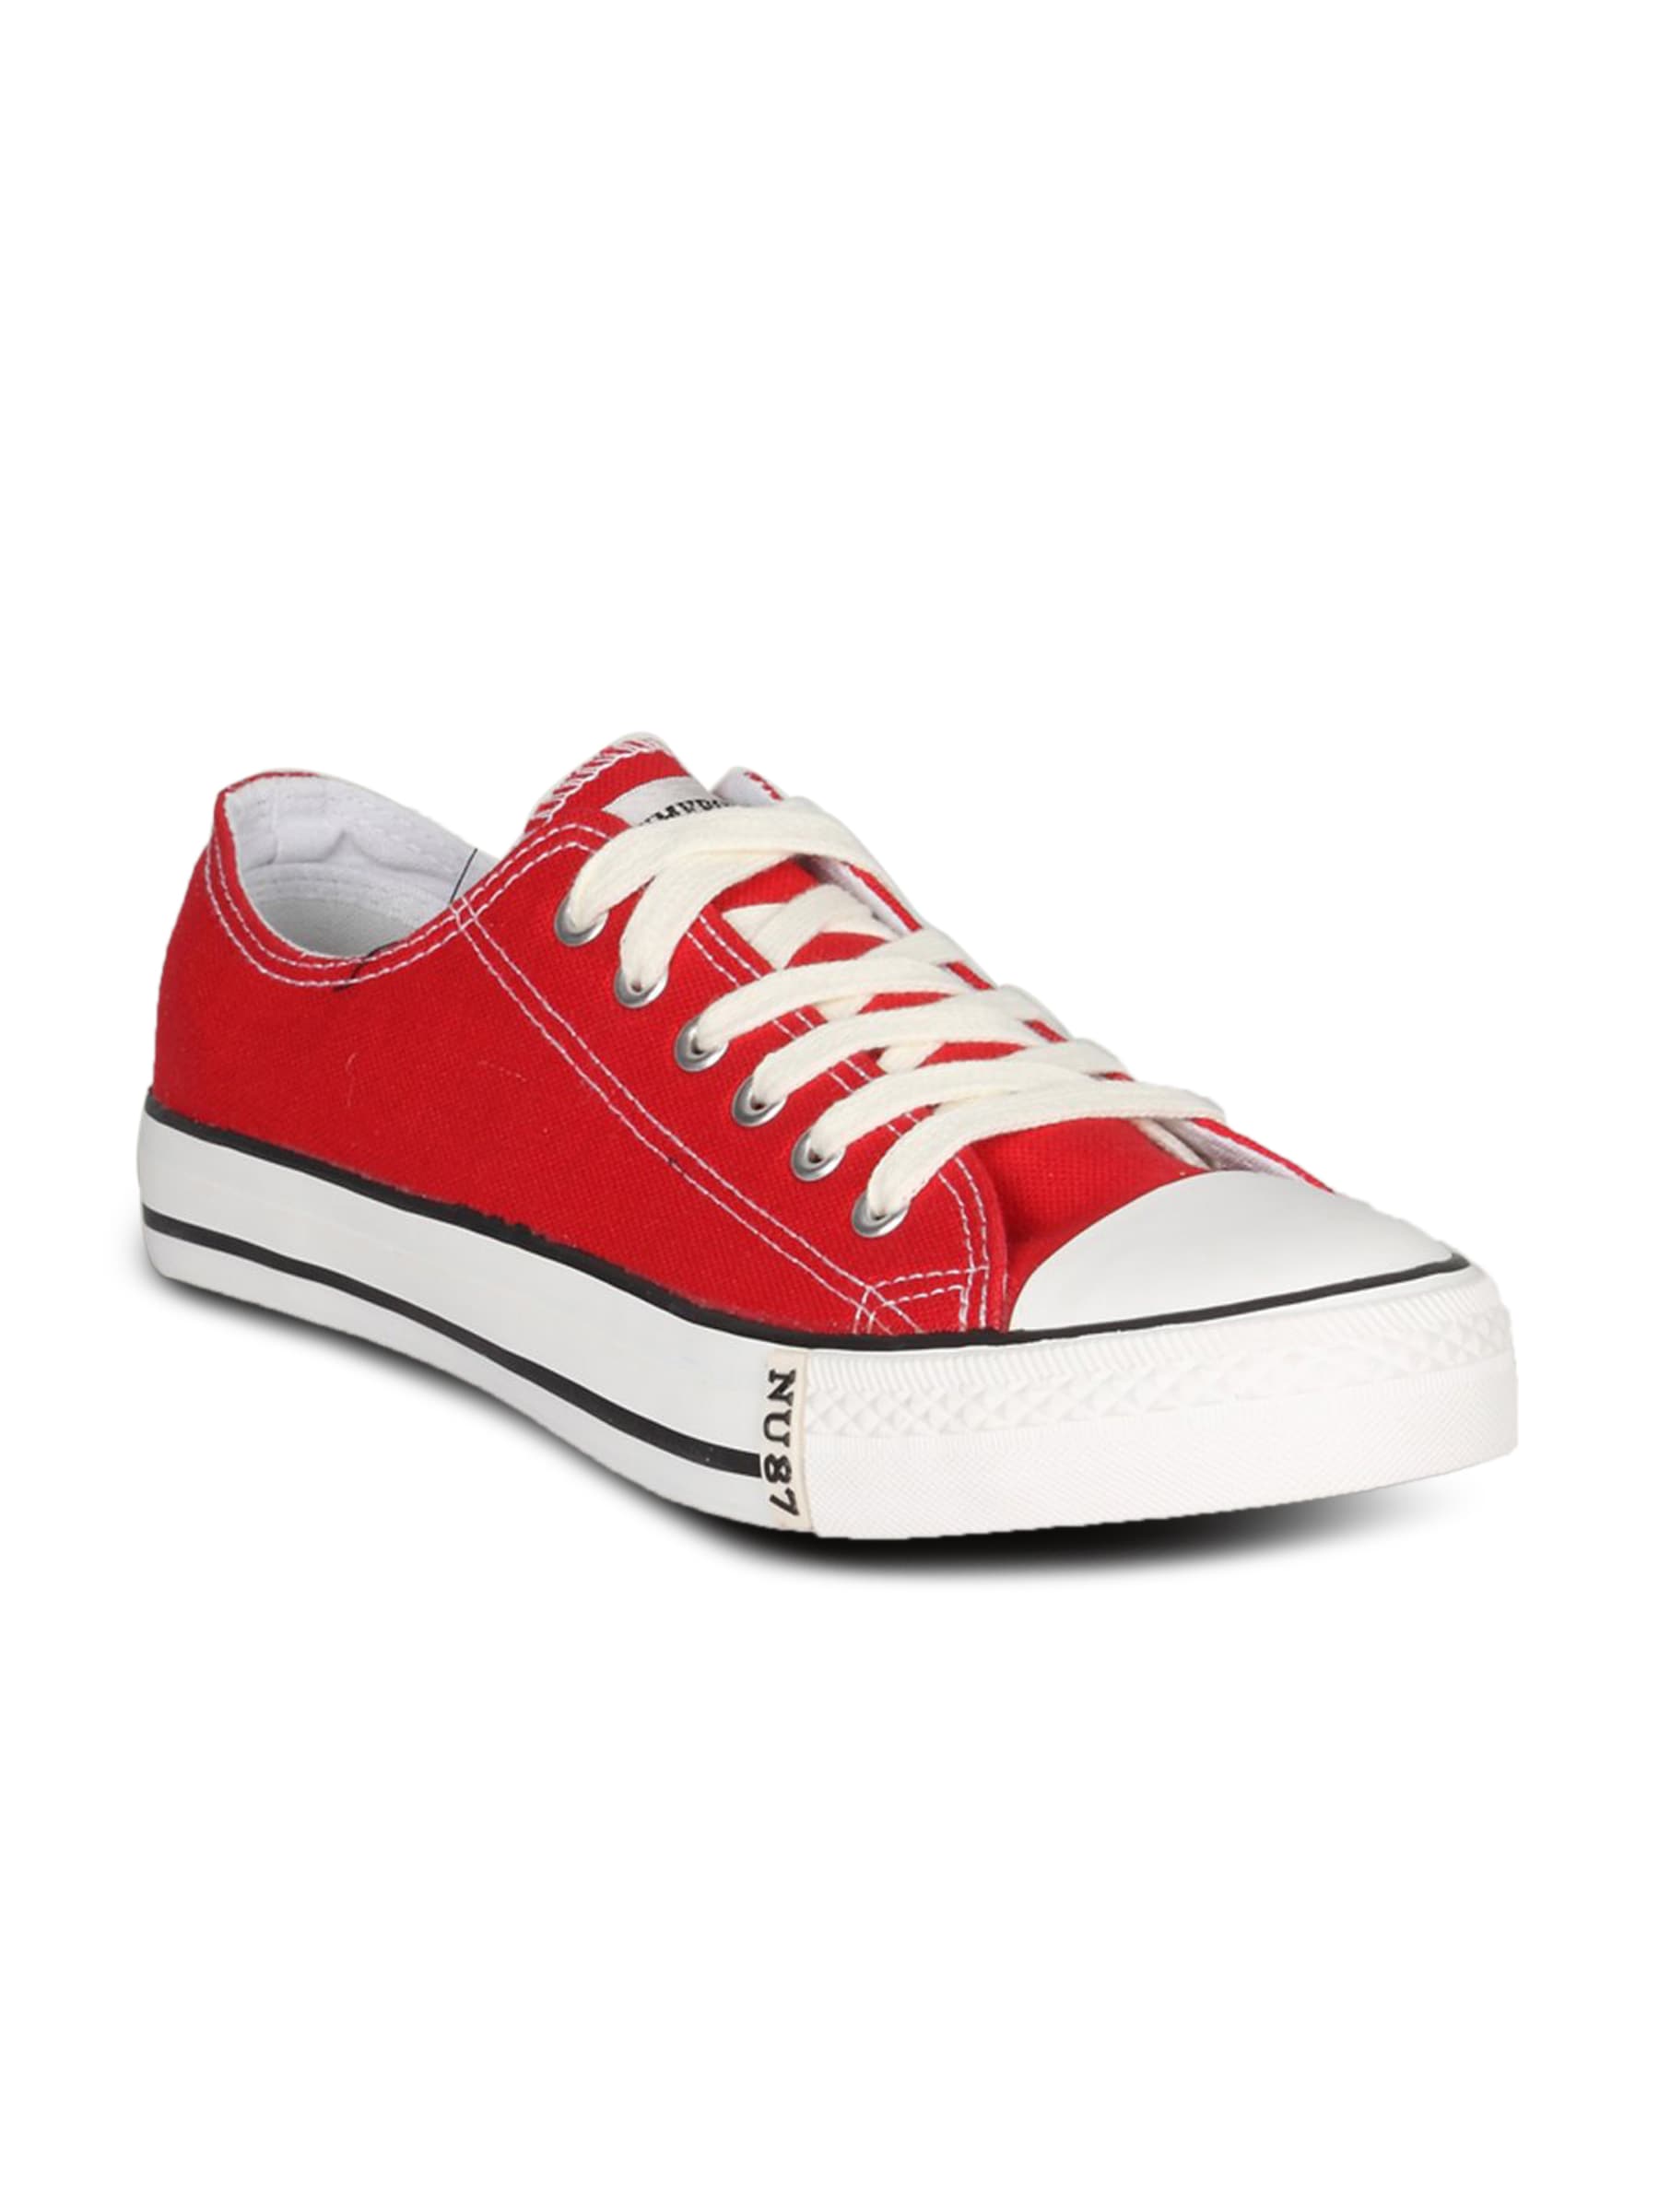 Numero Uno Men's Casual Red Canvas Shoe